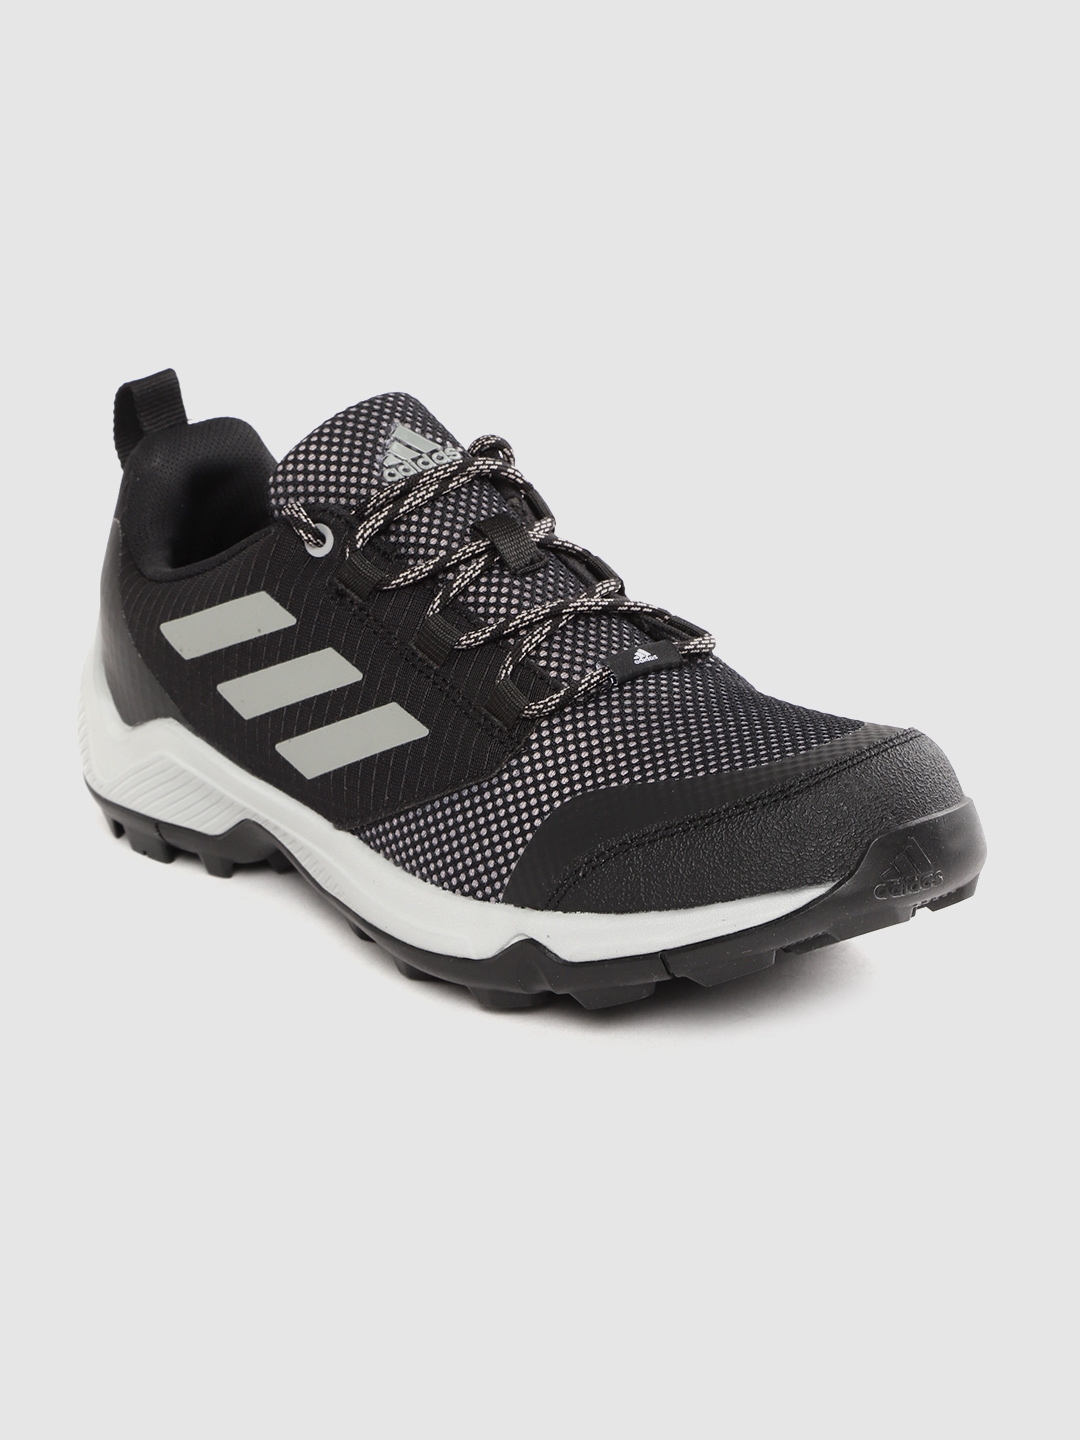 Buy ADIDAS Men Black & Grey Woven Design Zan Trail Trekking Shoes ...